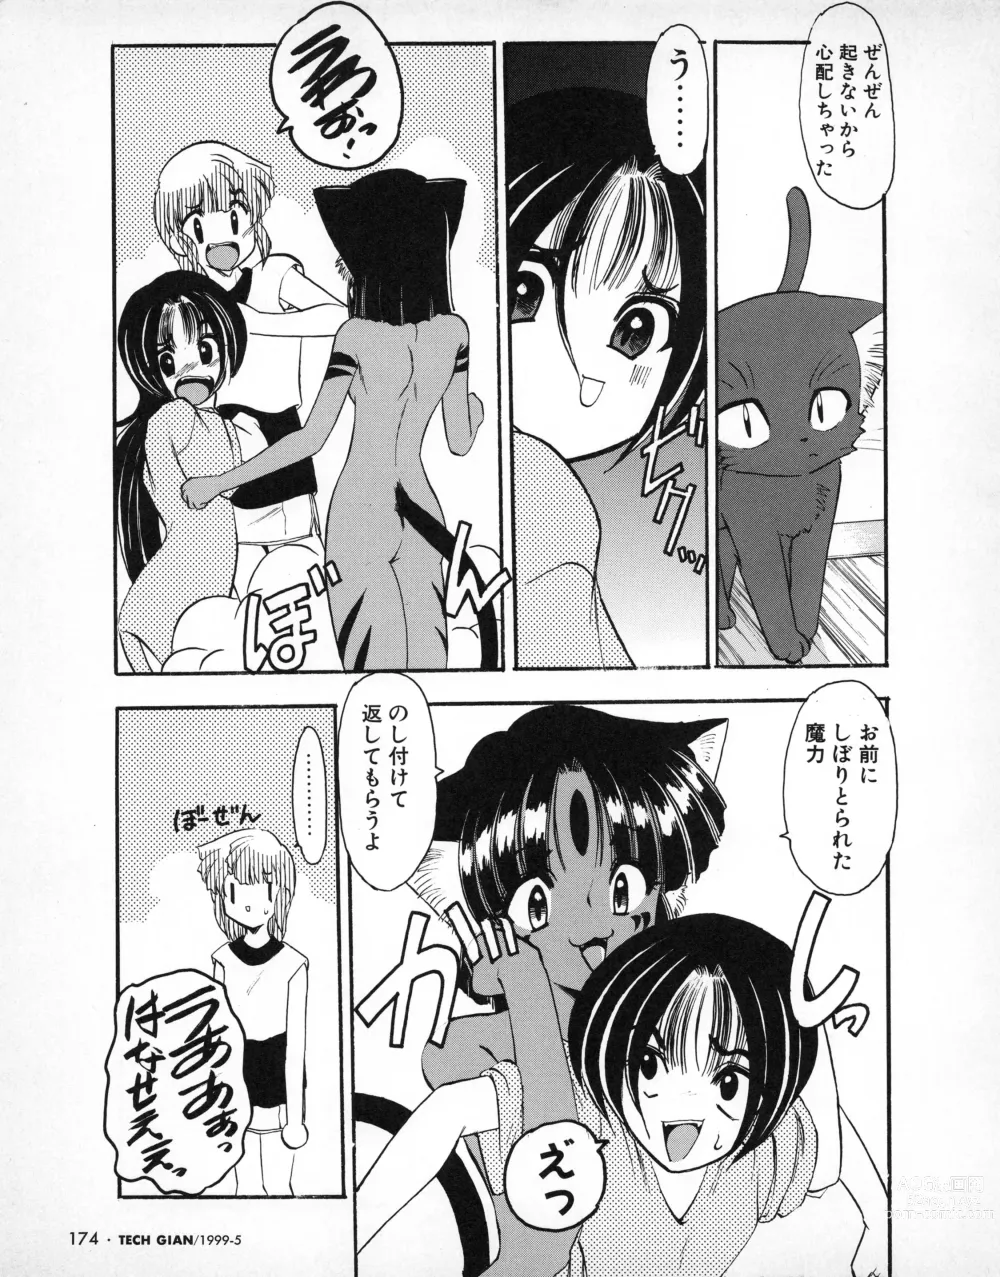 Page 169 of manga Tech Gian 031